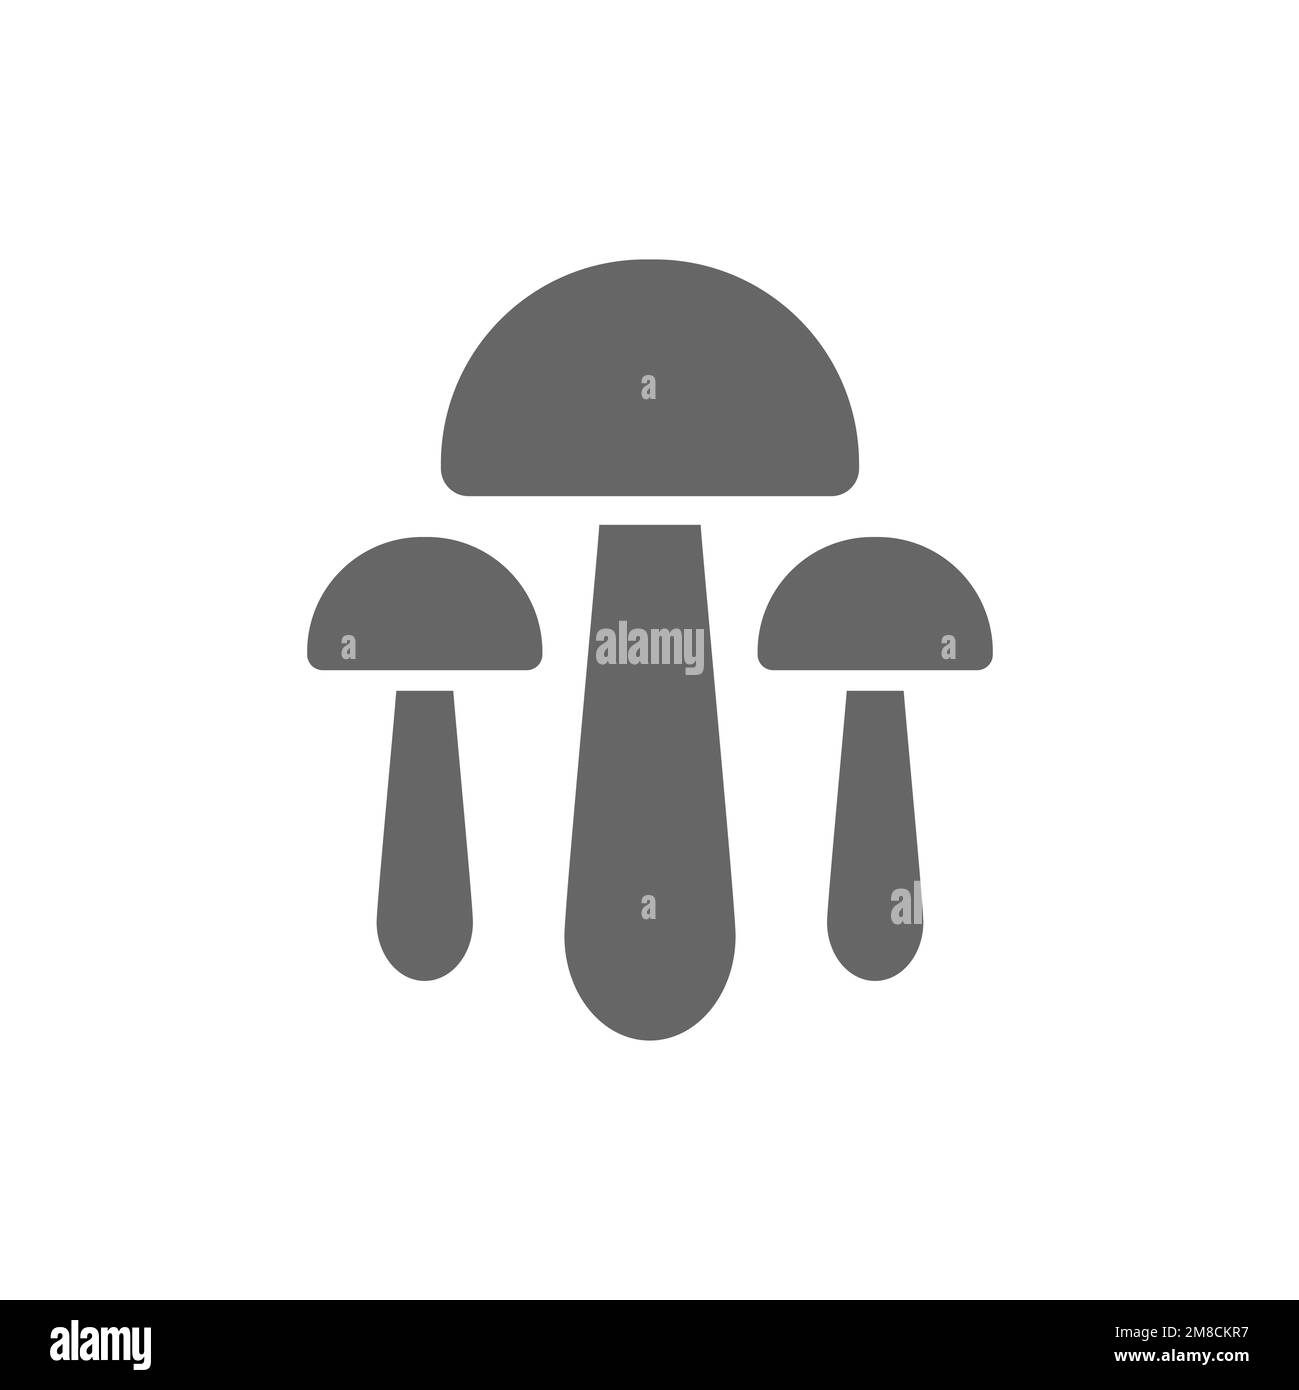 Fungus icon, common graphic resources, vector illustration. Stock Vector